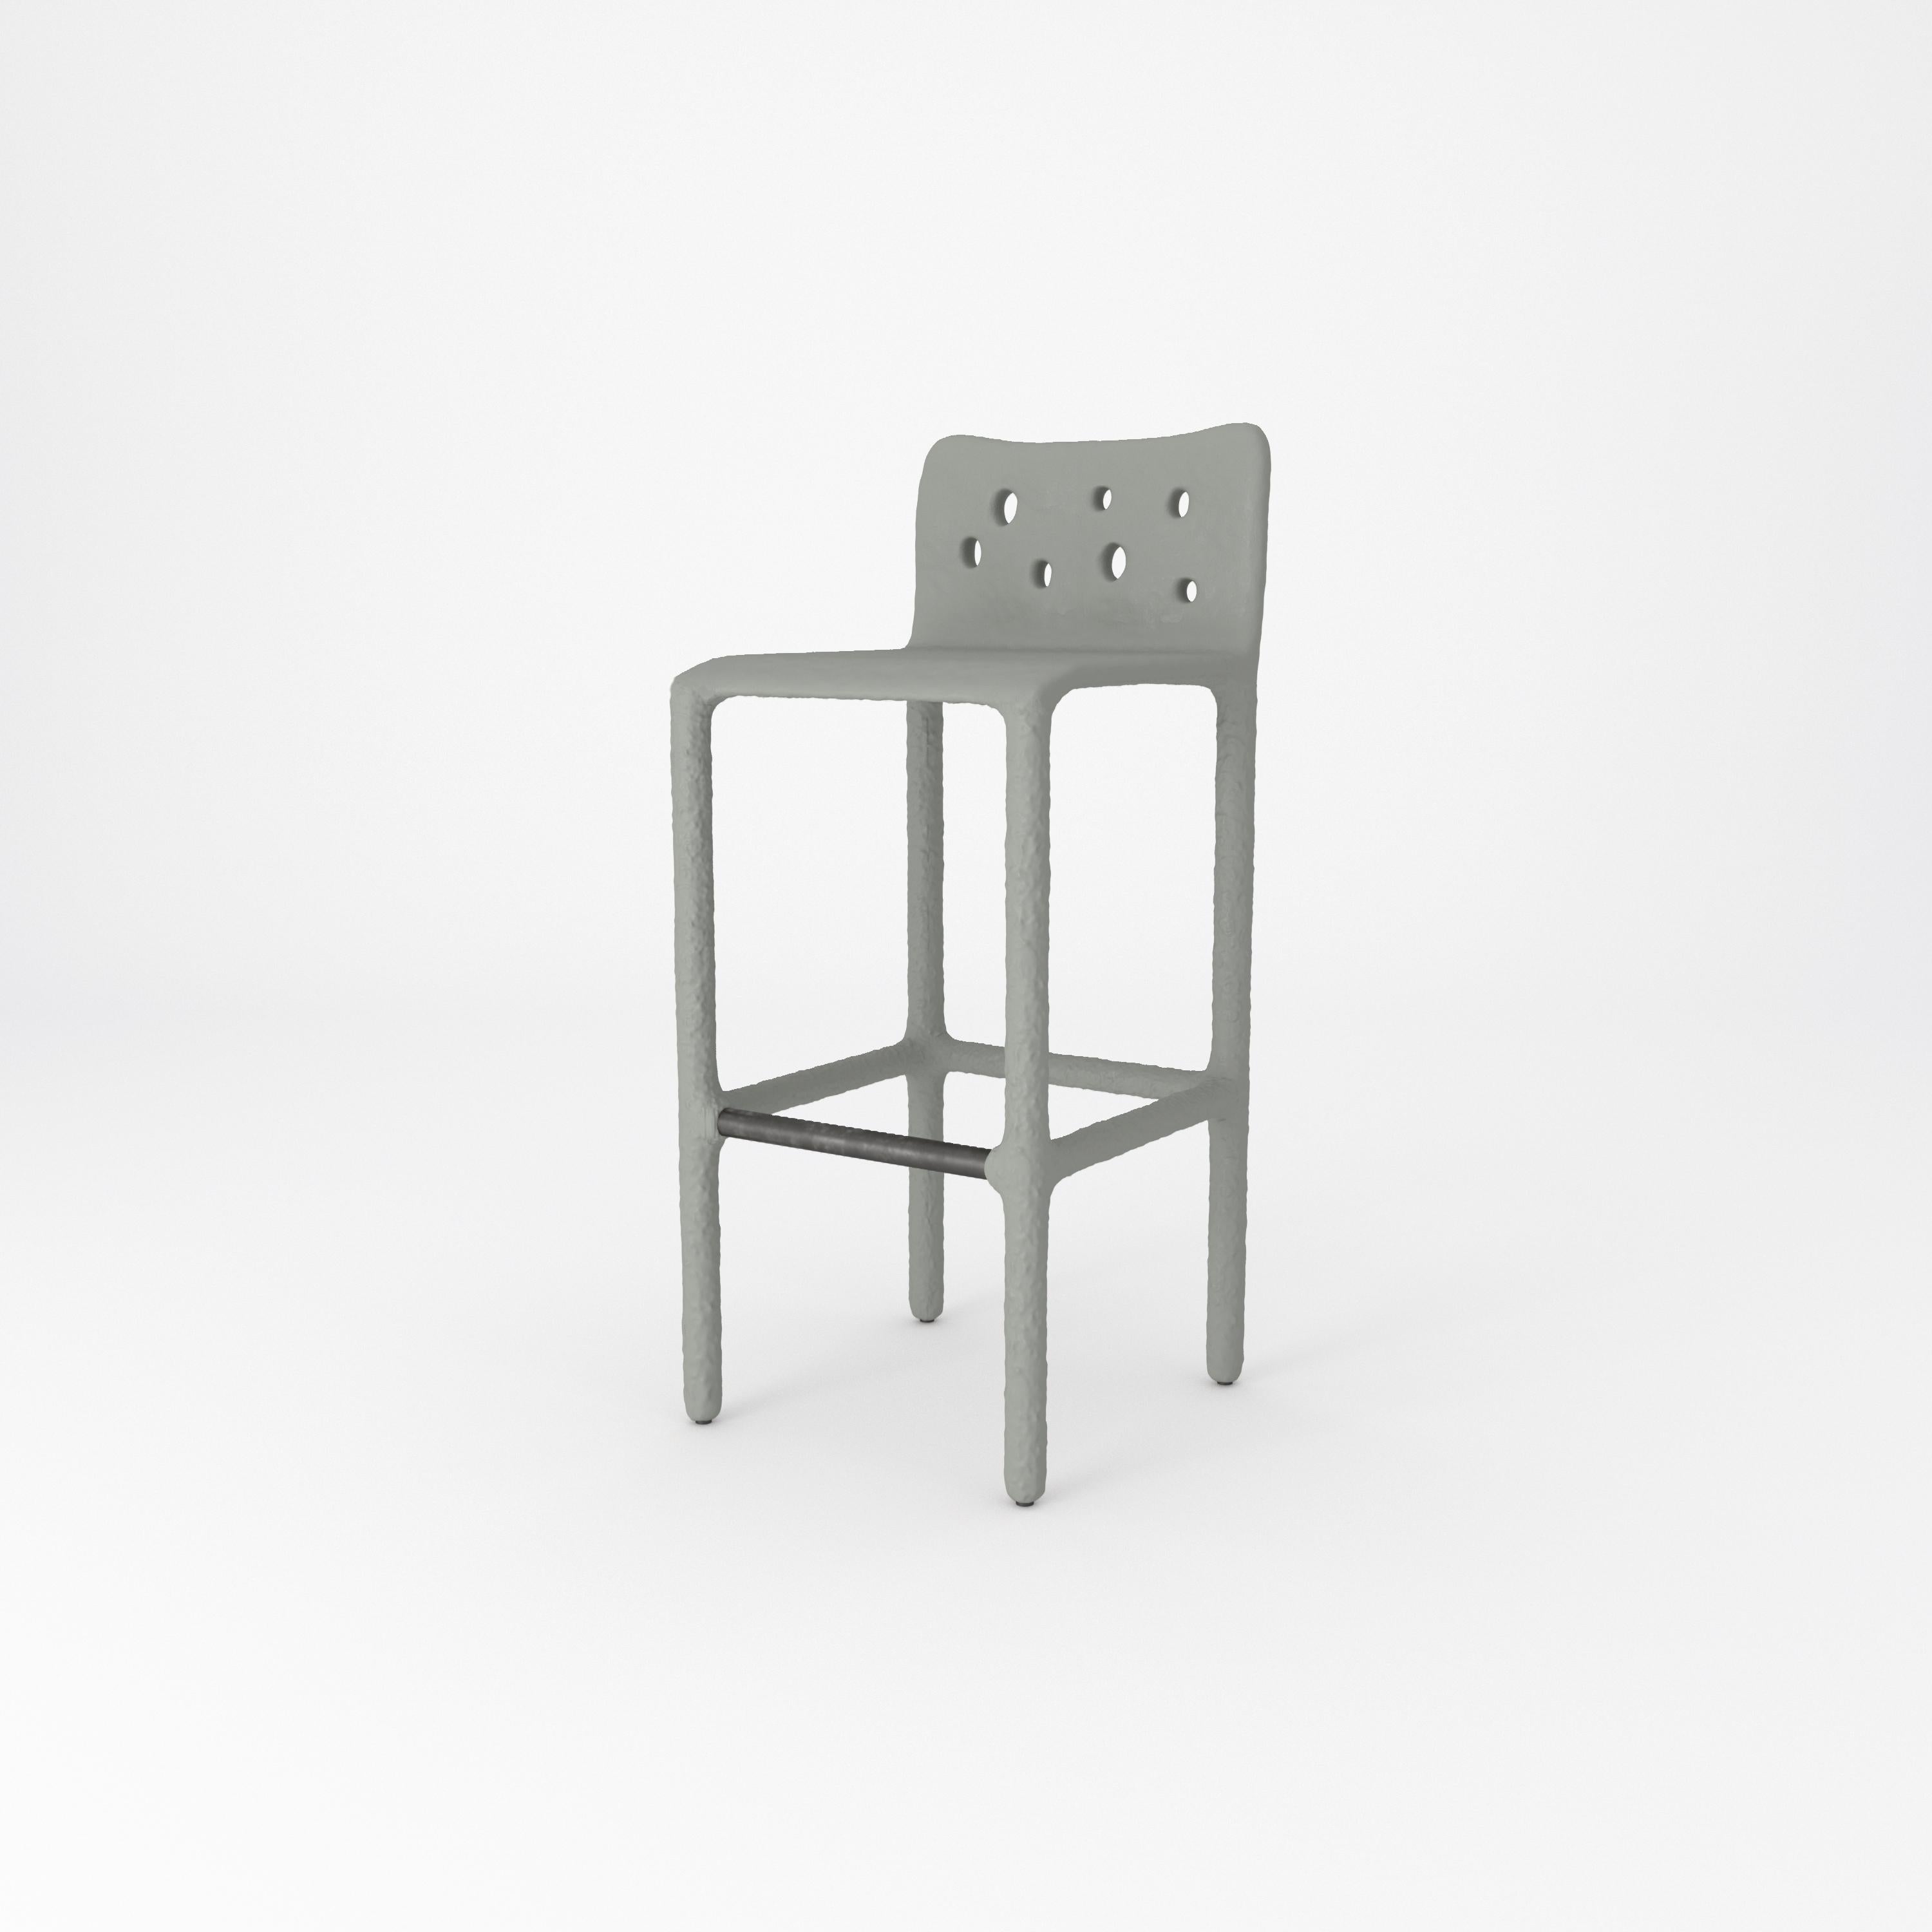 White Sculpted Contemporary Chair by FAINA 2